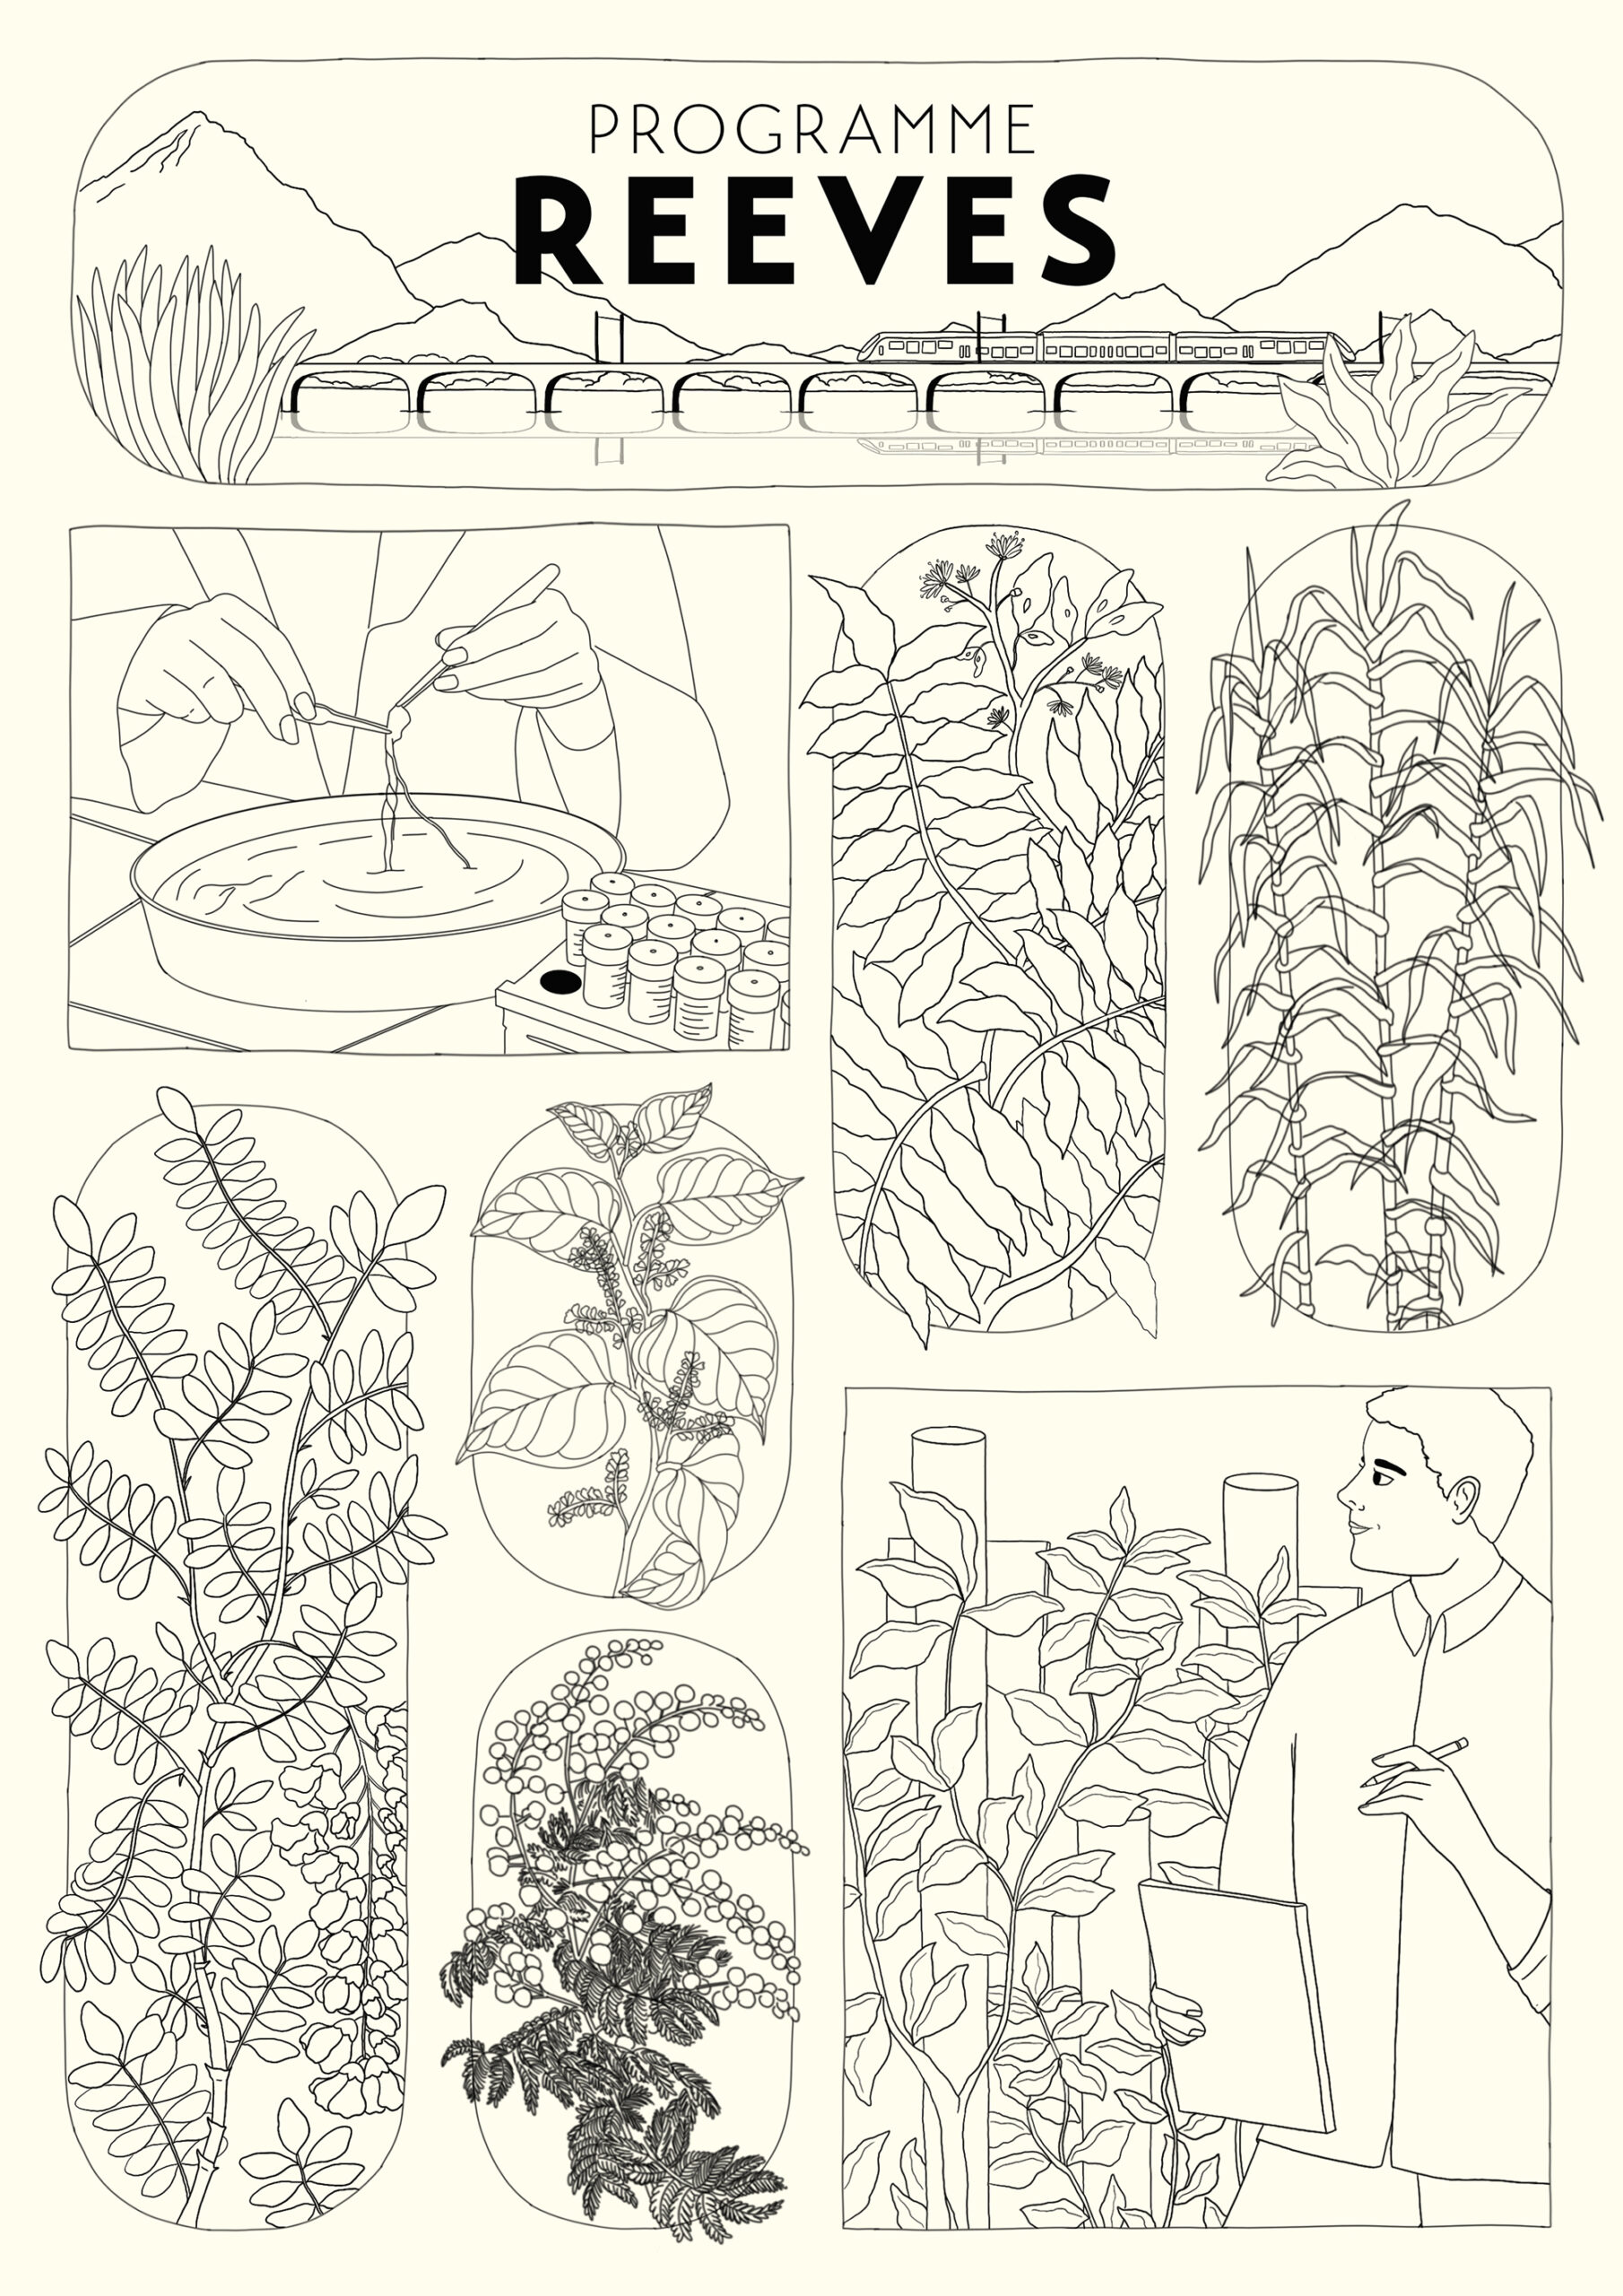 Marie Pellet - Illustration - graphic design - portfolio - 2023 - SNCF - Programme REEVES - Botanique - croquis